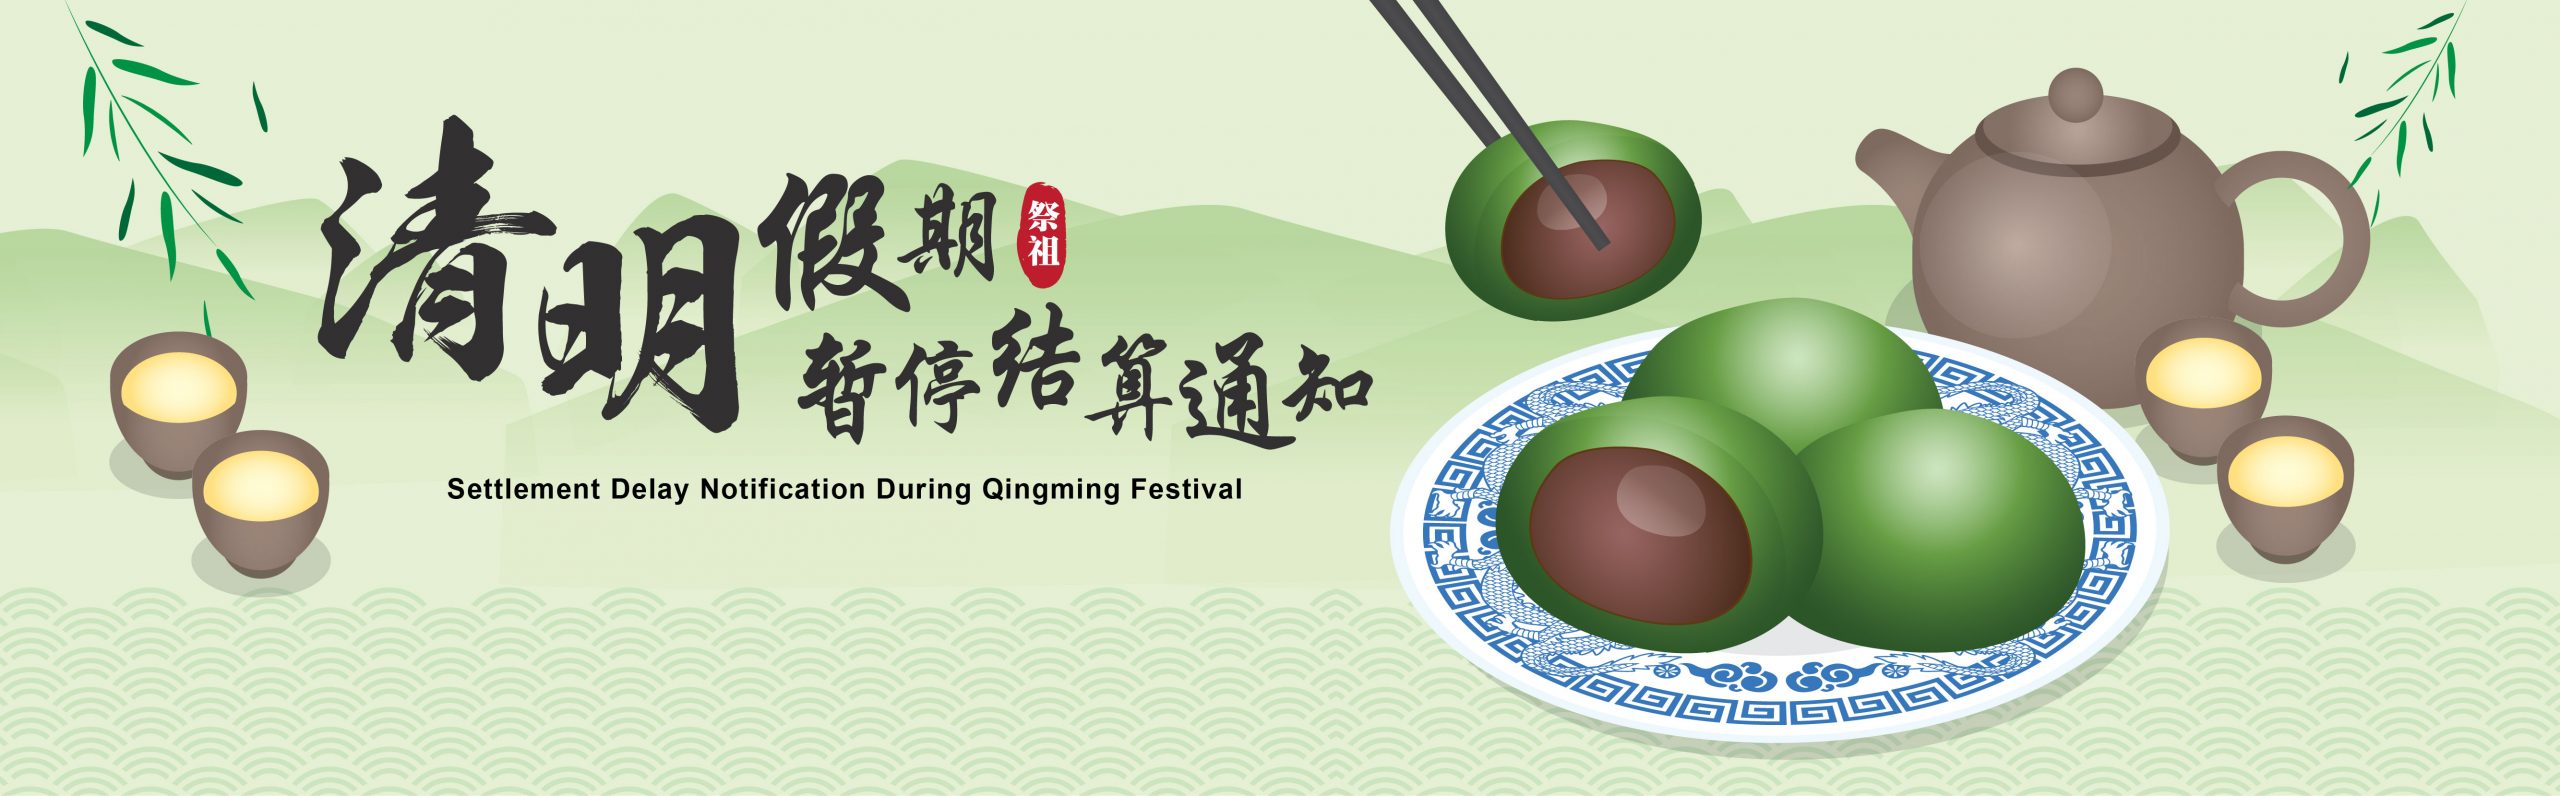 Settlement Delay Notification During Qingming Festival in China 关于2021年中国清明假期暂停结算的通知